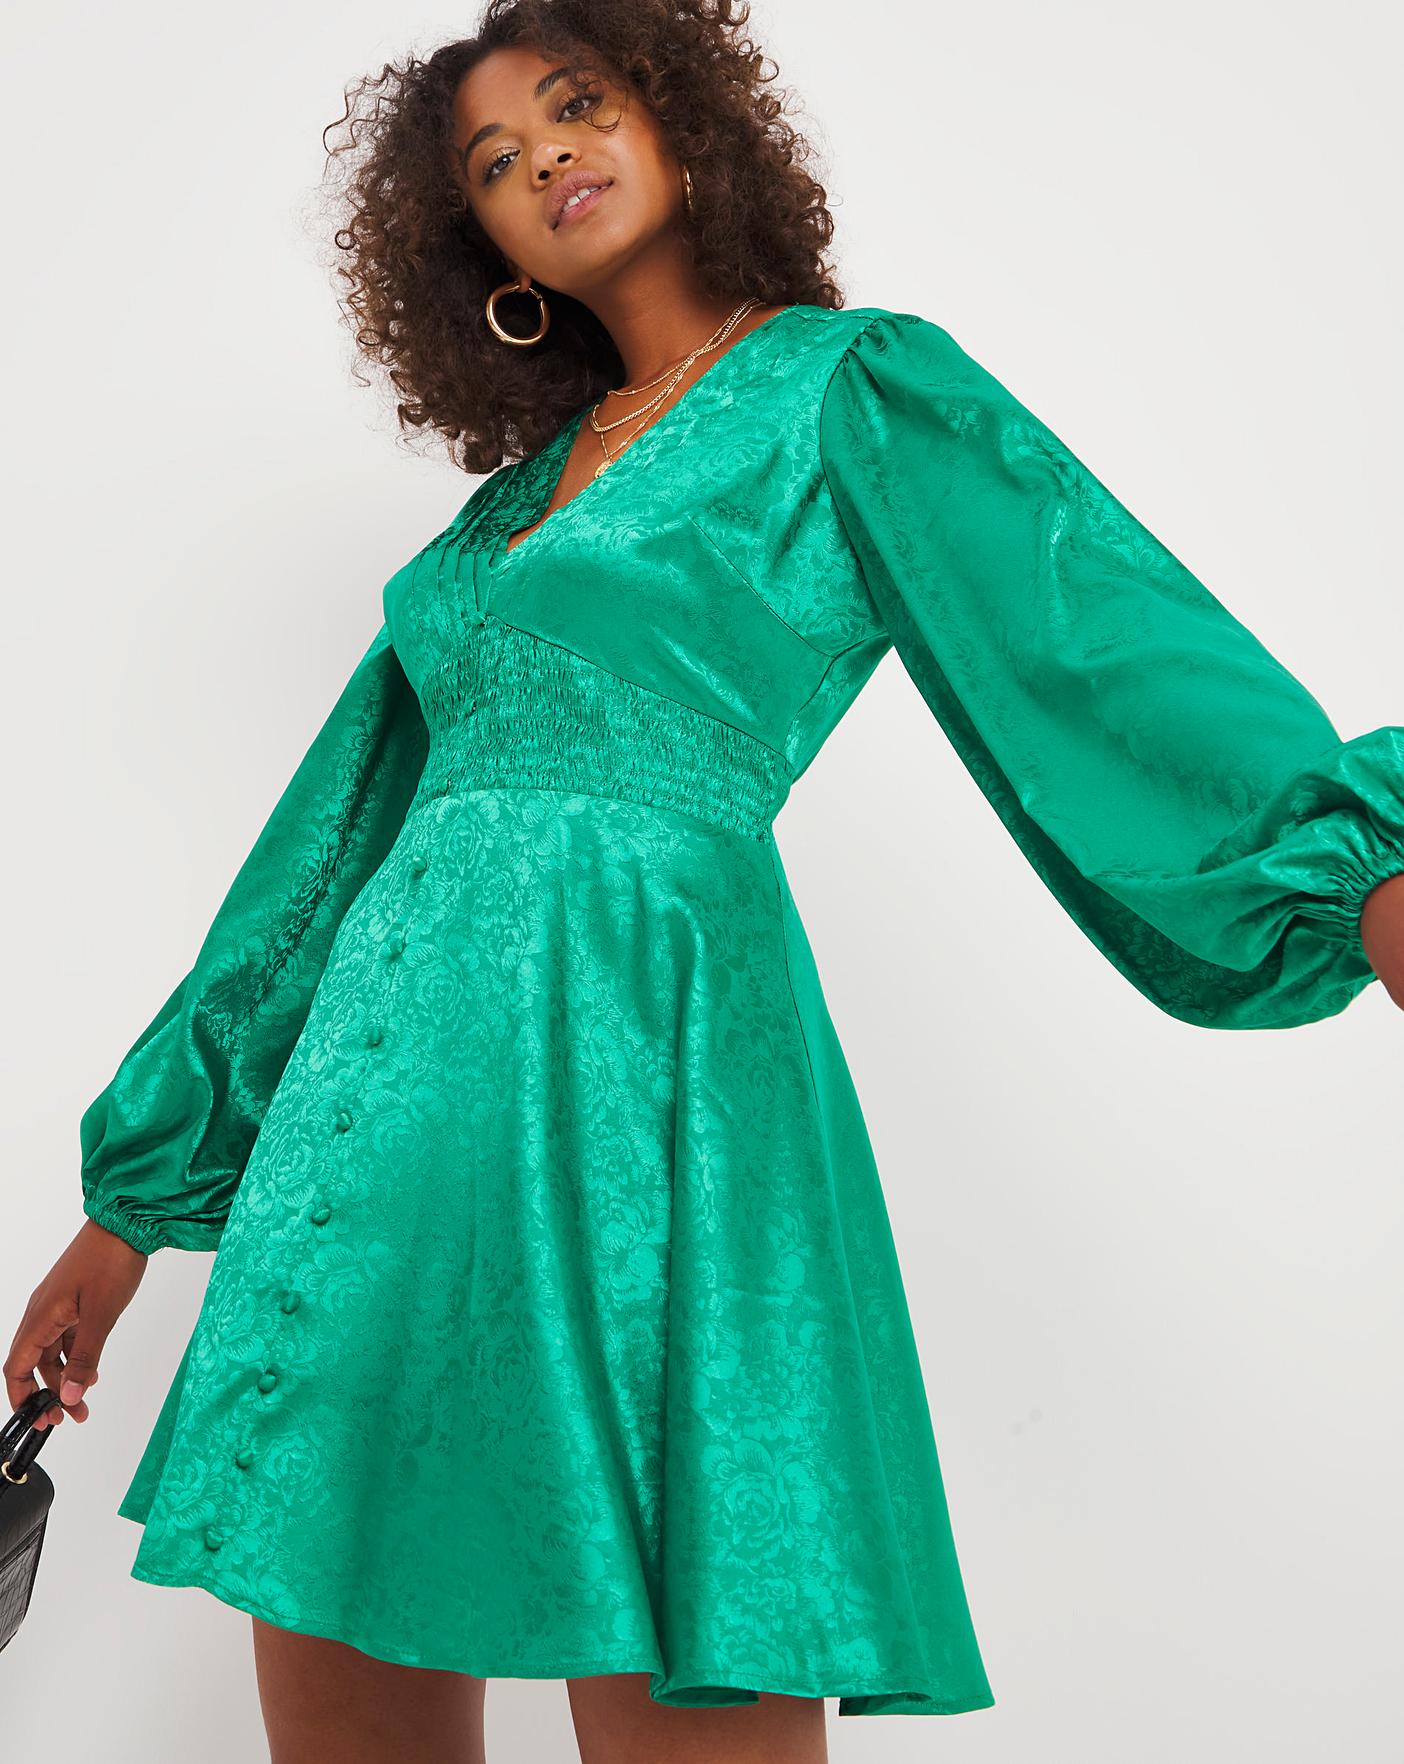 Balloon sleeve mini dress in green jacquard - Isabella Dress